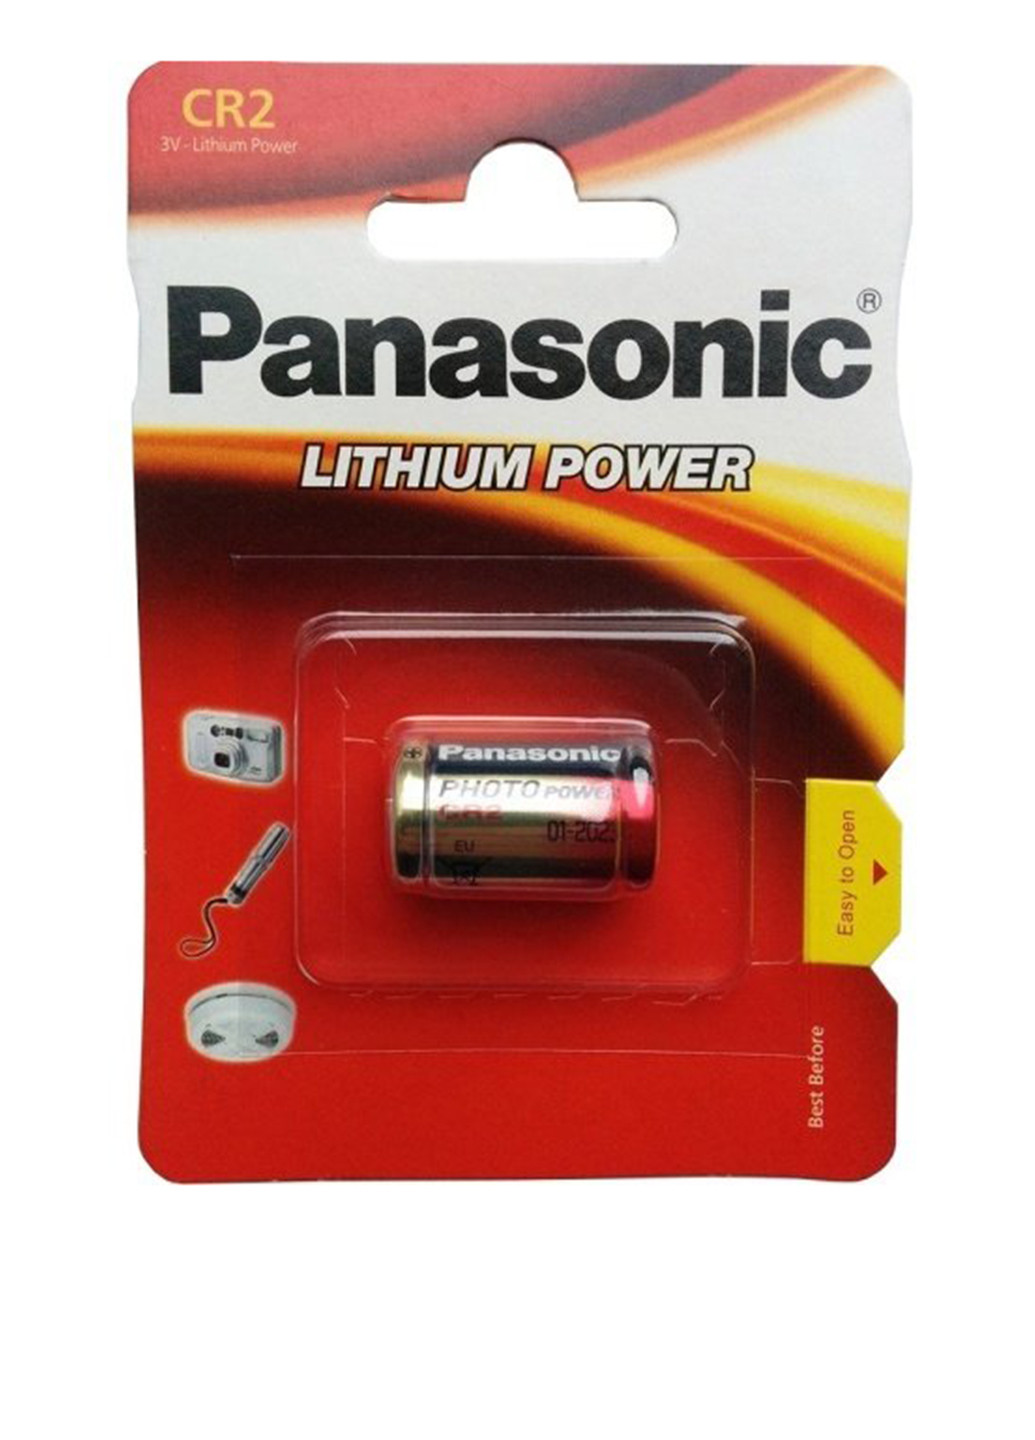 Батарейка CR-2L BLI 1 LITHIUM (CR-2L / 1BP) Panasonic cr-2l bli 1 lithium (cr-2l/1bp) (138004345)